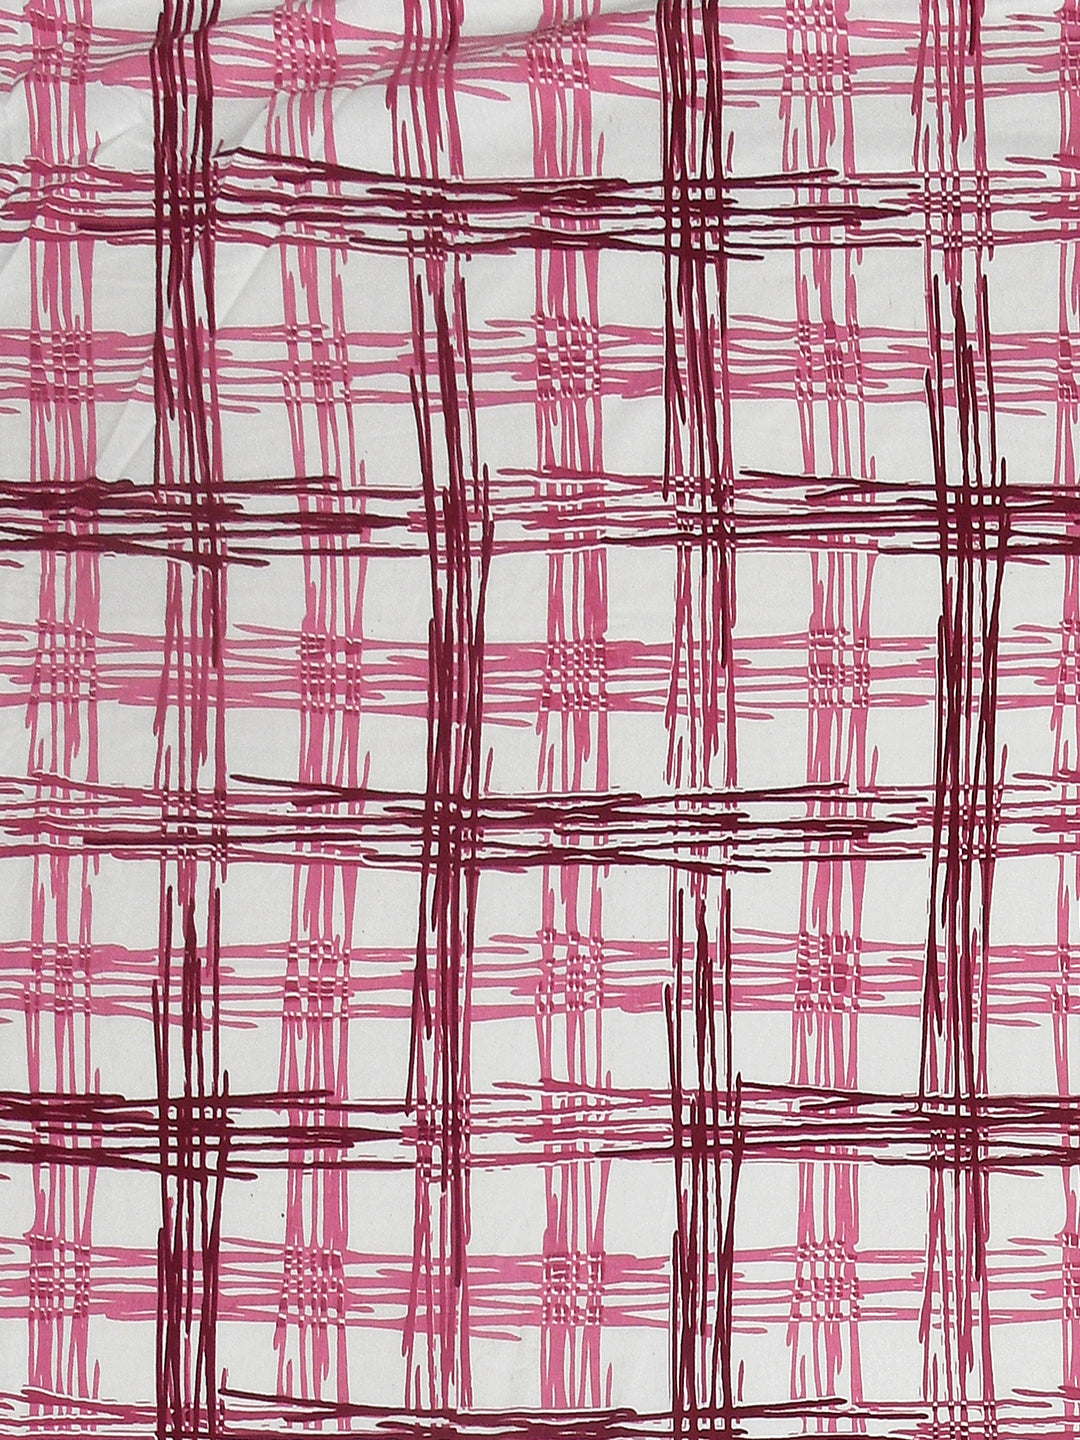 Bella Casa Fashion & Retail Ltd BEDSHEET 88 X 96 Inch / Pink / Cotton Double Bedsheet with 2 Pillow Covers Cotton Geometric Design Pink Colour - Element Collection